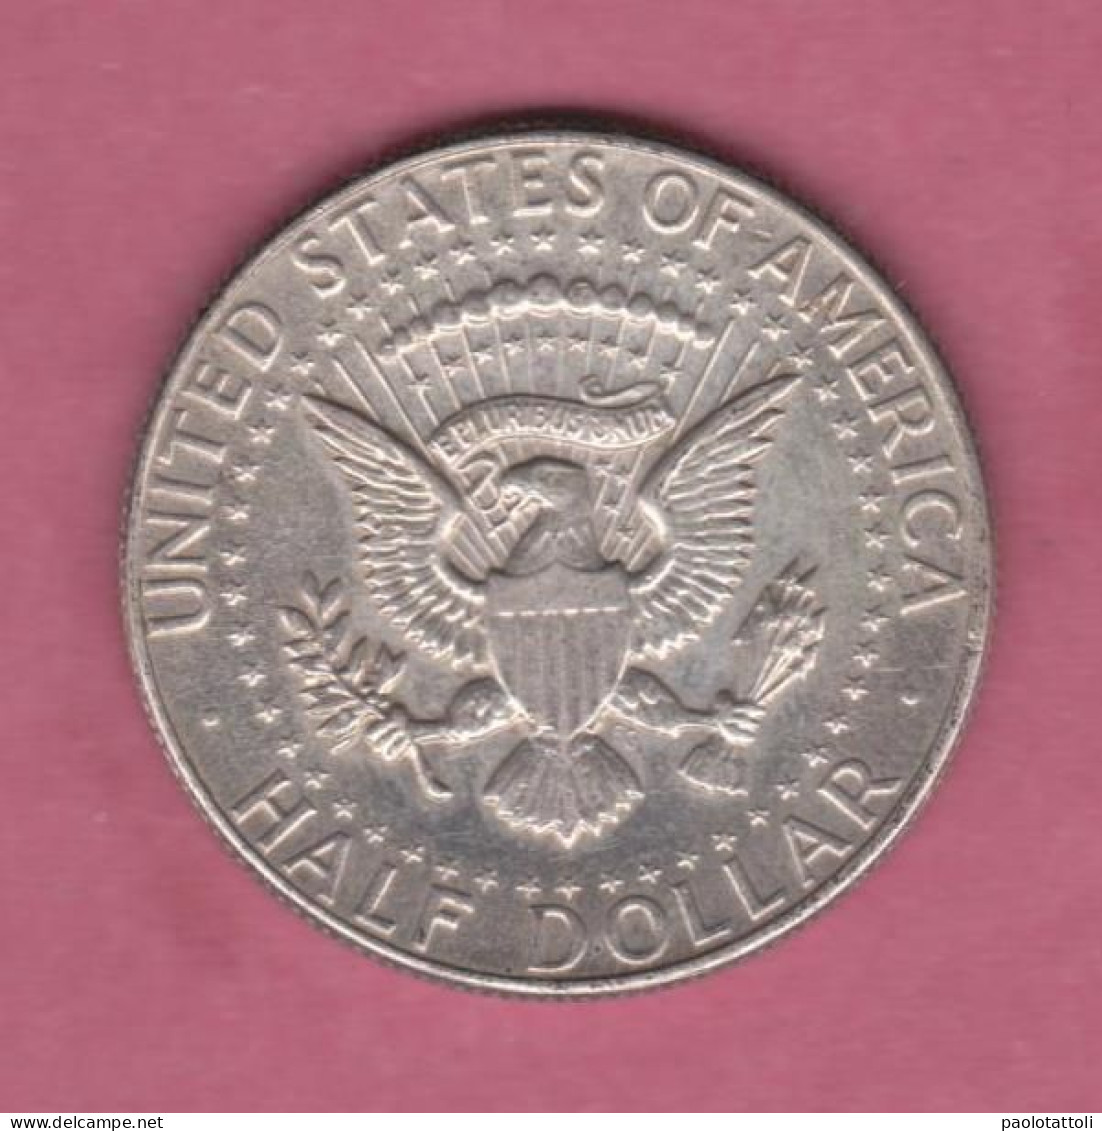 USA, 1964- Half Dollar- 90% Silver- Obverse Portrait Of John F. Kennedy. - Commemoratifs